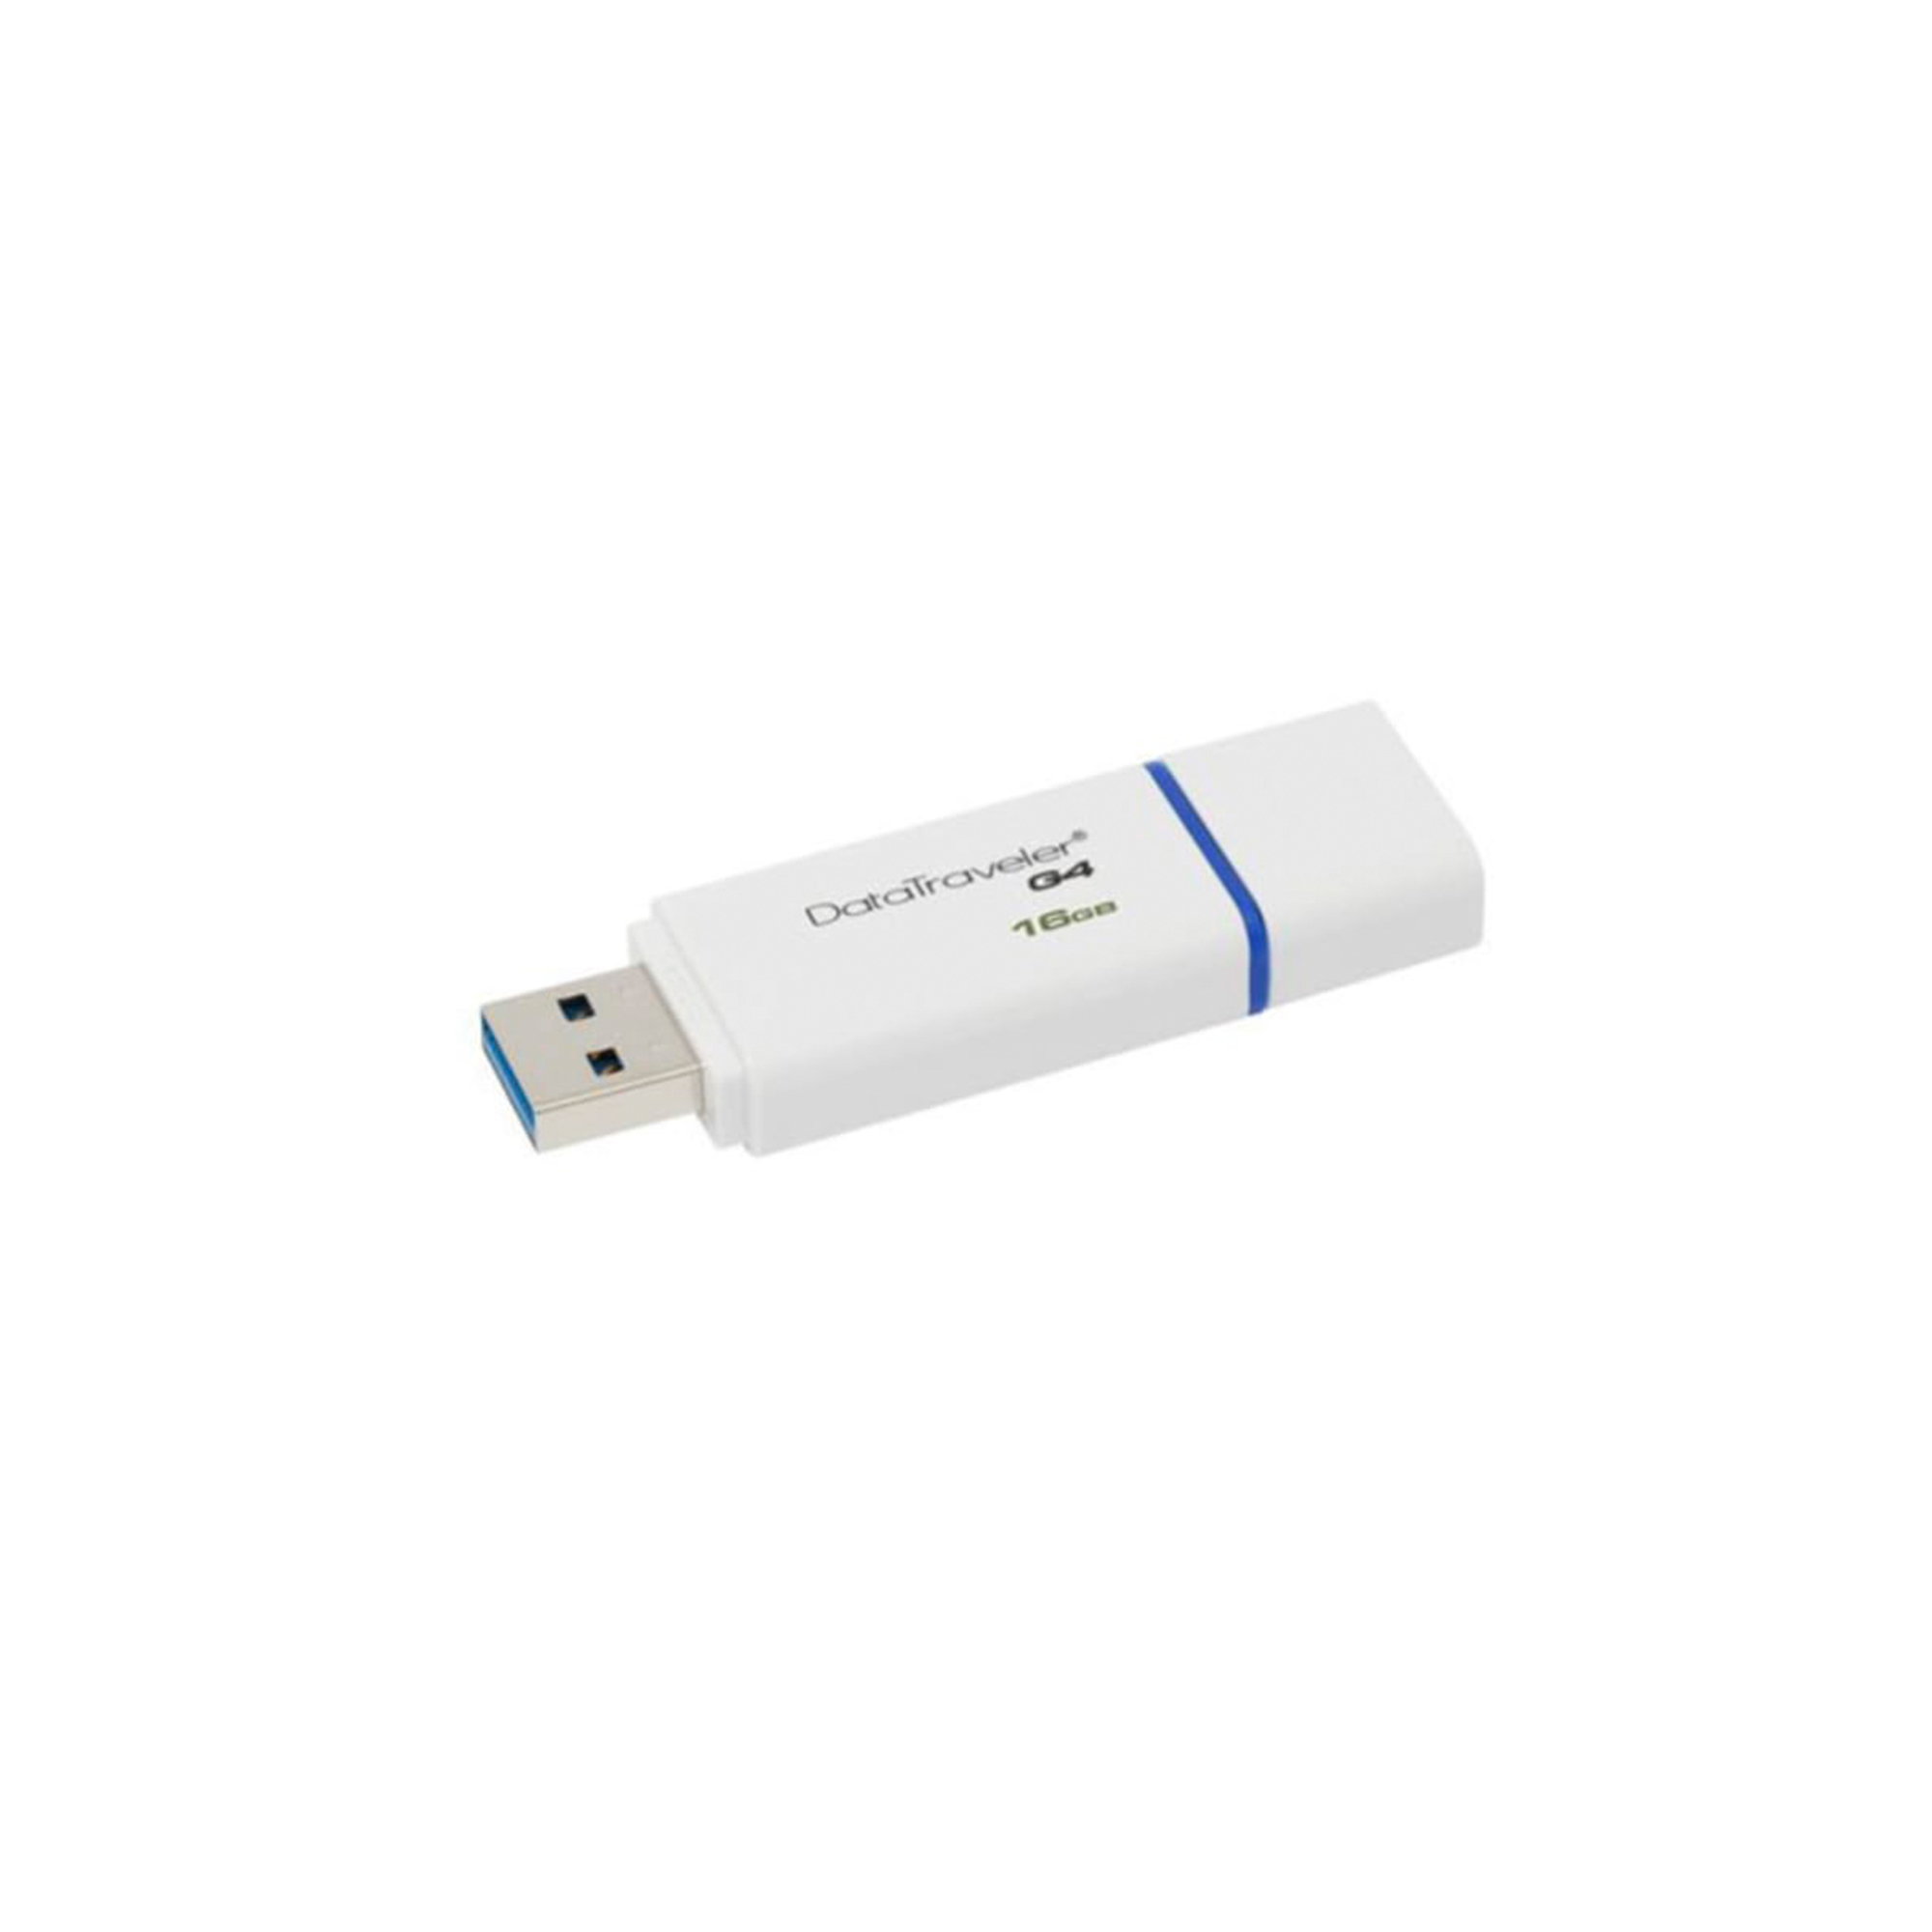 SALE] Kingston G4 DTIG4 USB 3.0 USB Flash - Accenthub